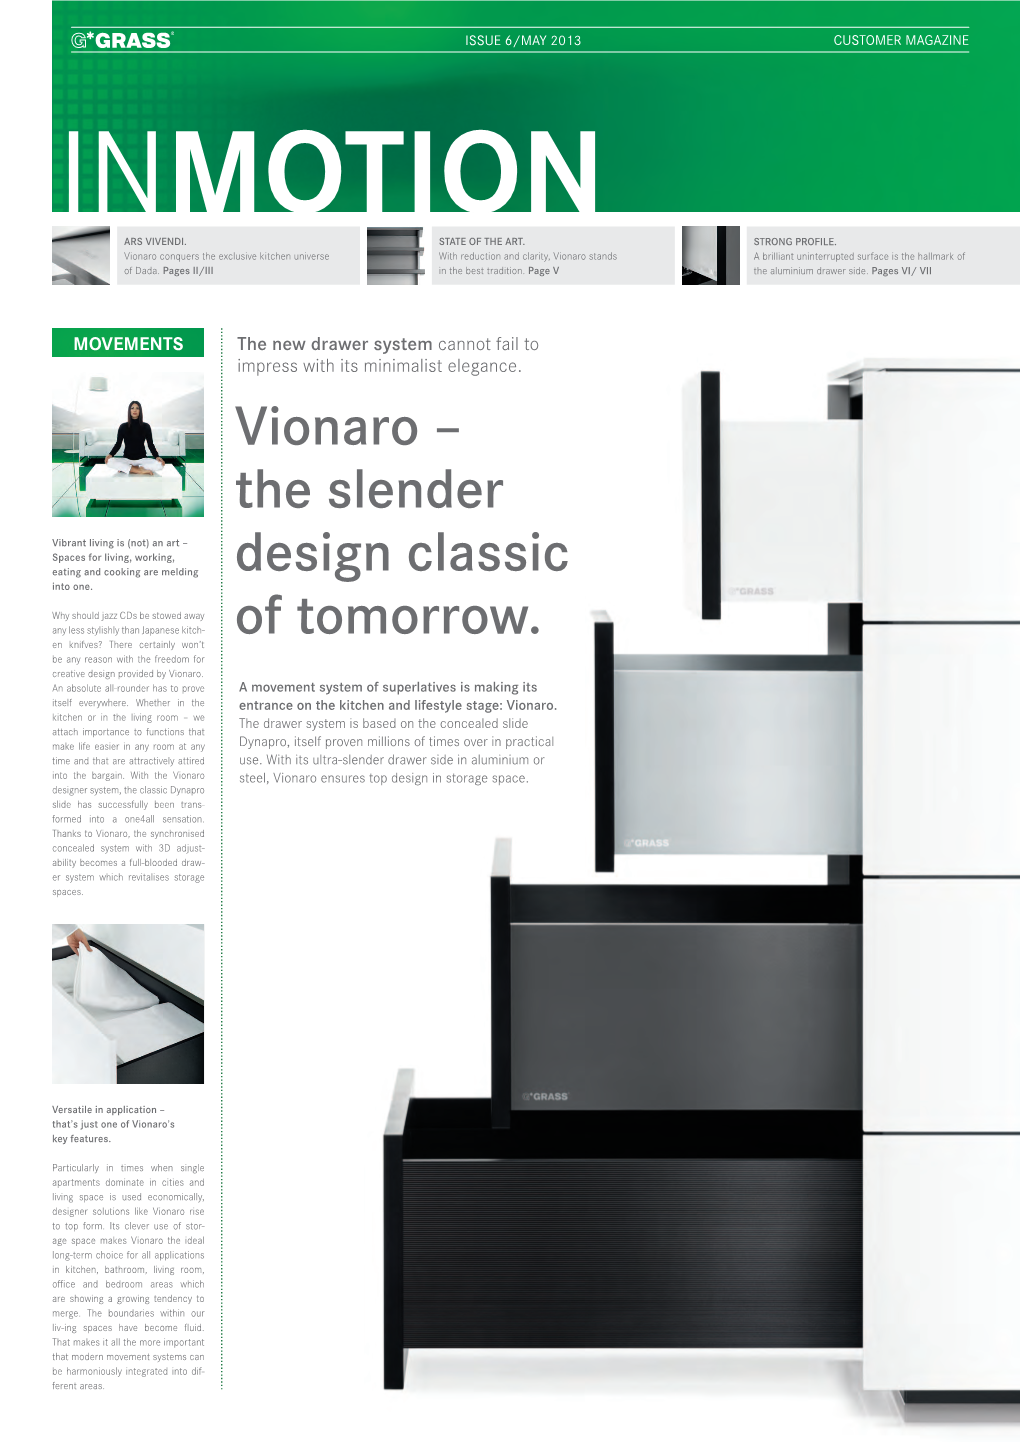 Vionaro – the Slender Design Classic of Tomorrow